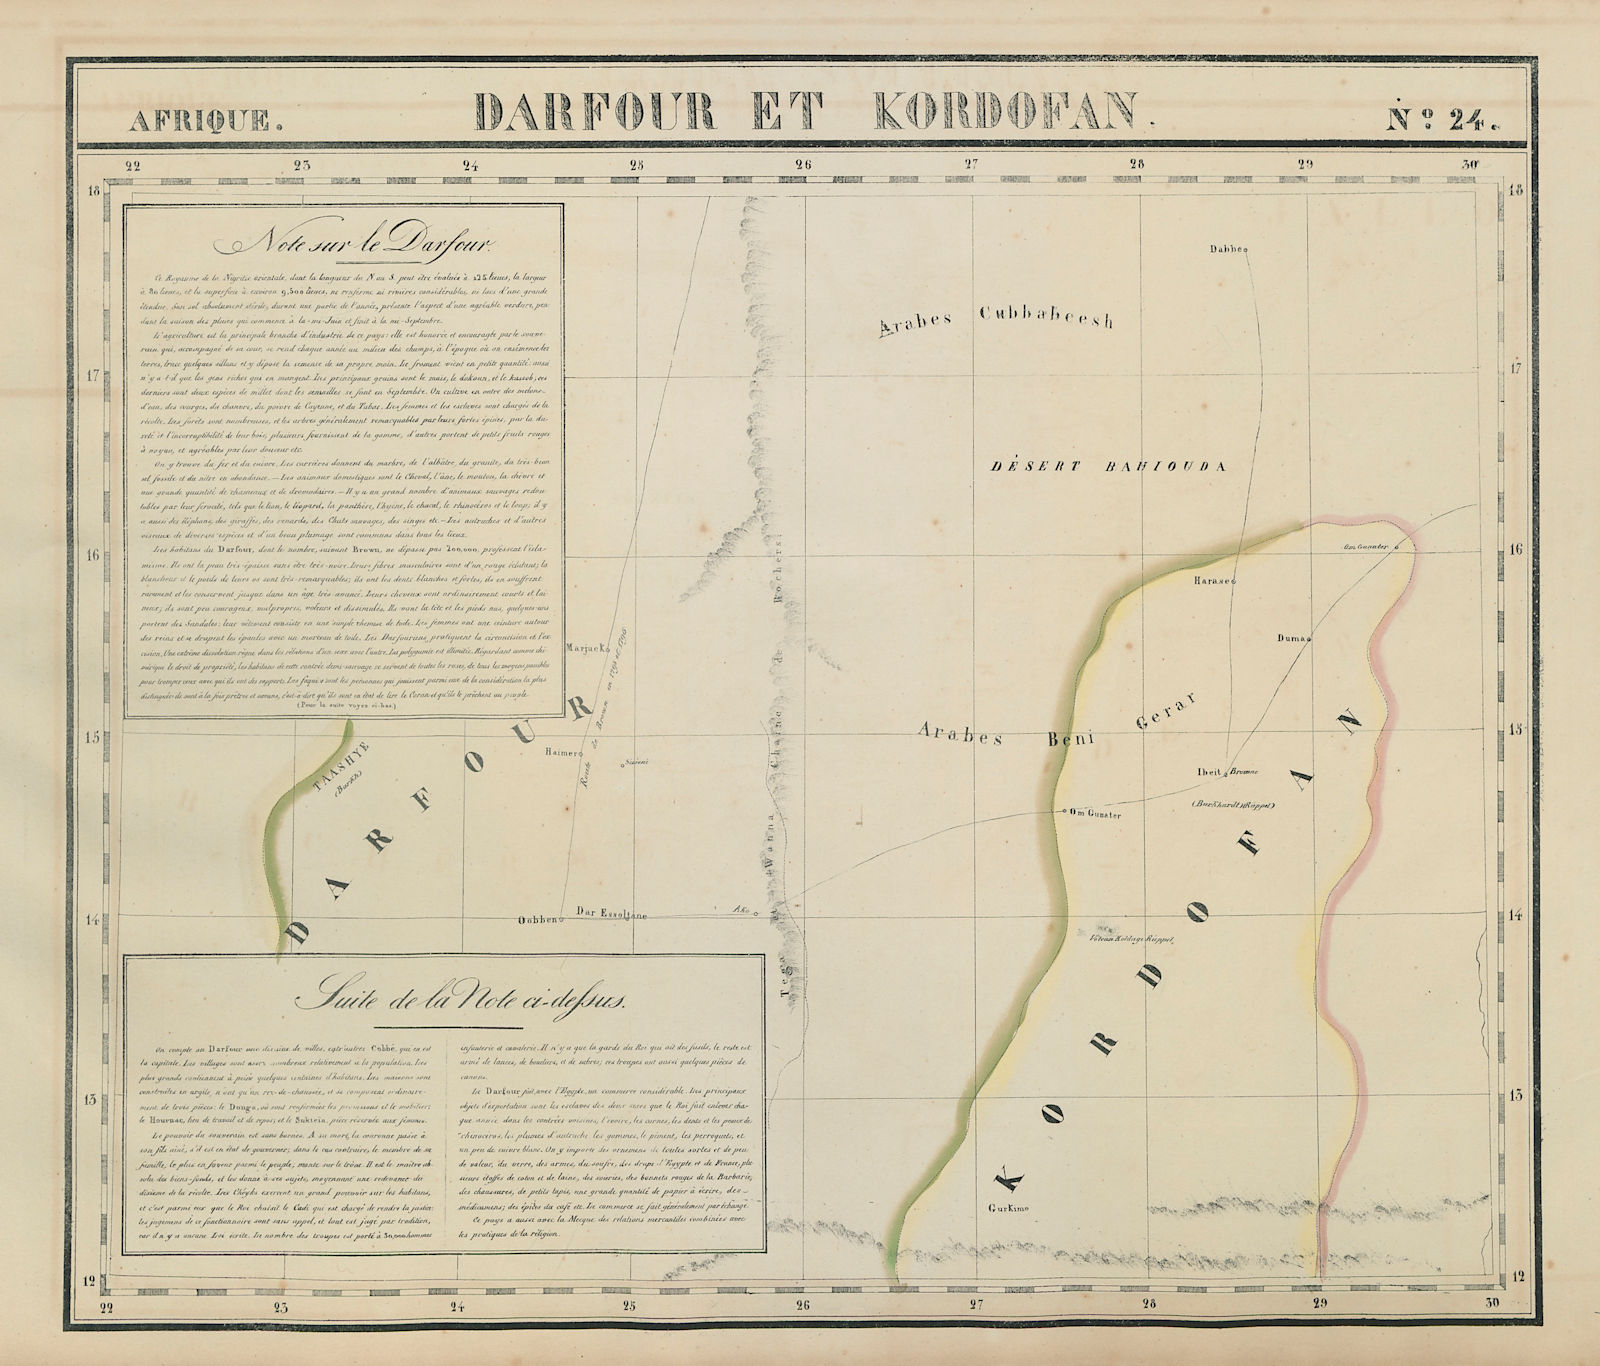 Associate Product Afrique. Darfour et Kordofan #24. Western Sudan. Darfur. VANDERMAELEN 1827 map